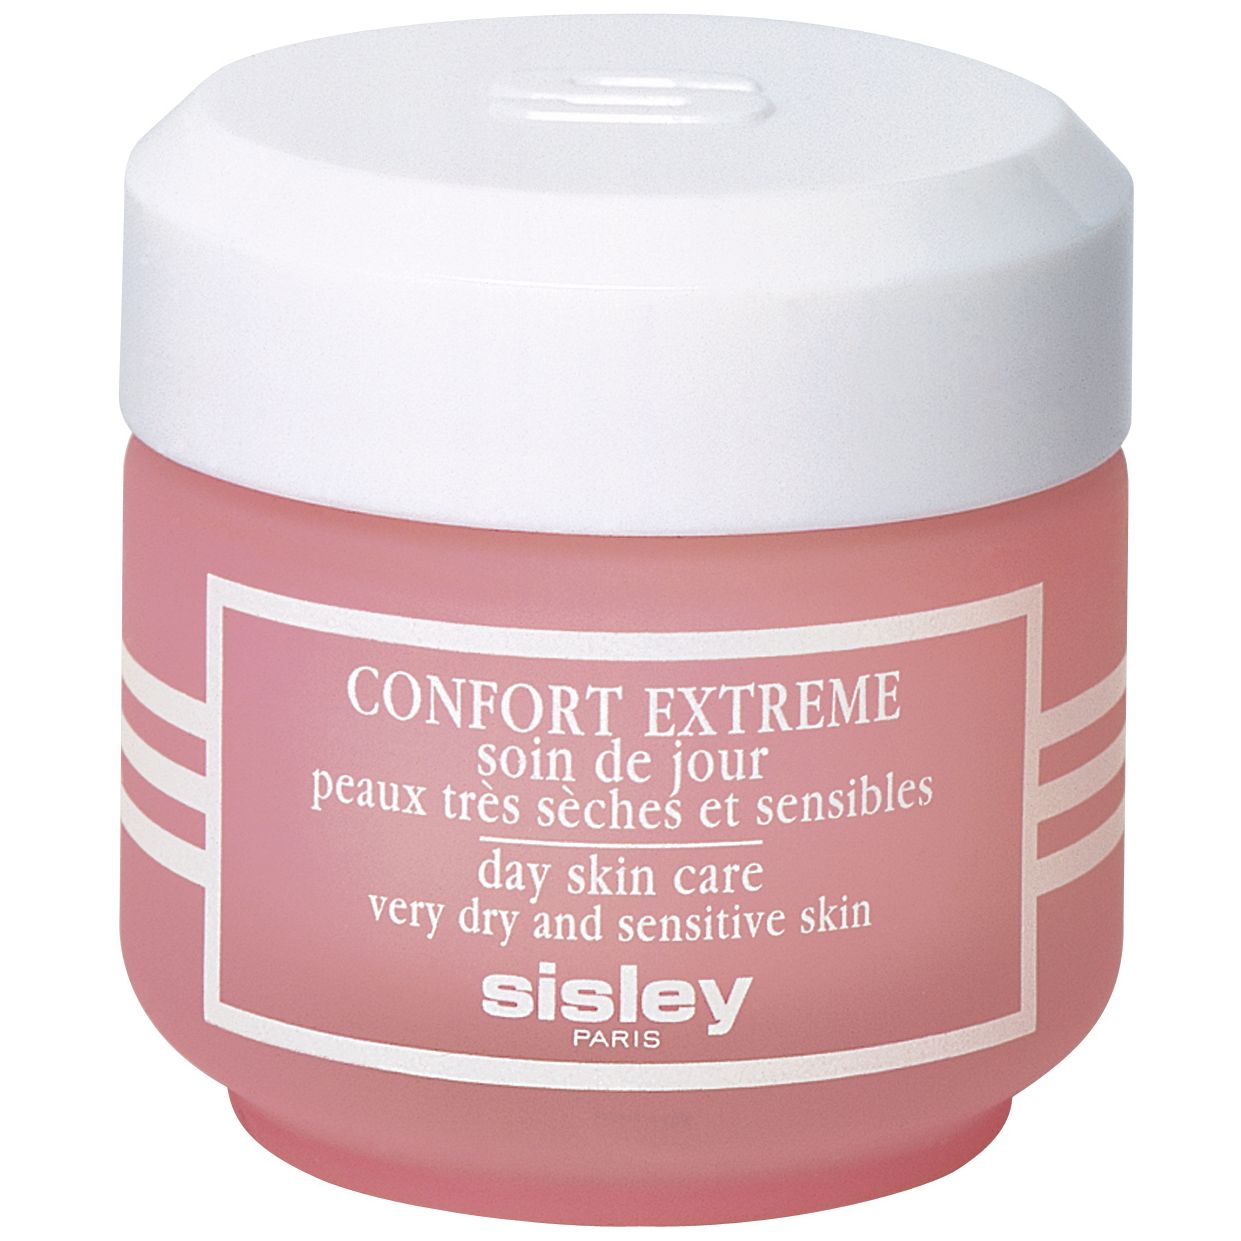 Sisley Confort Extrême Day Skin Care, 50ml